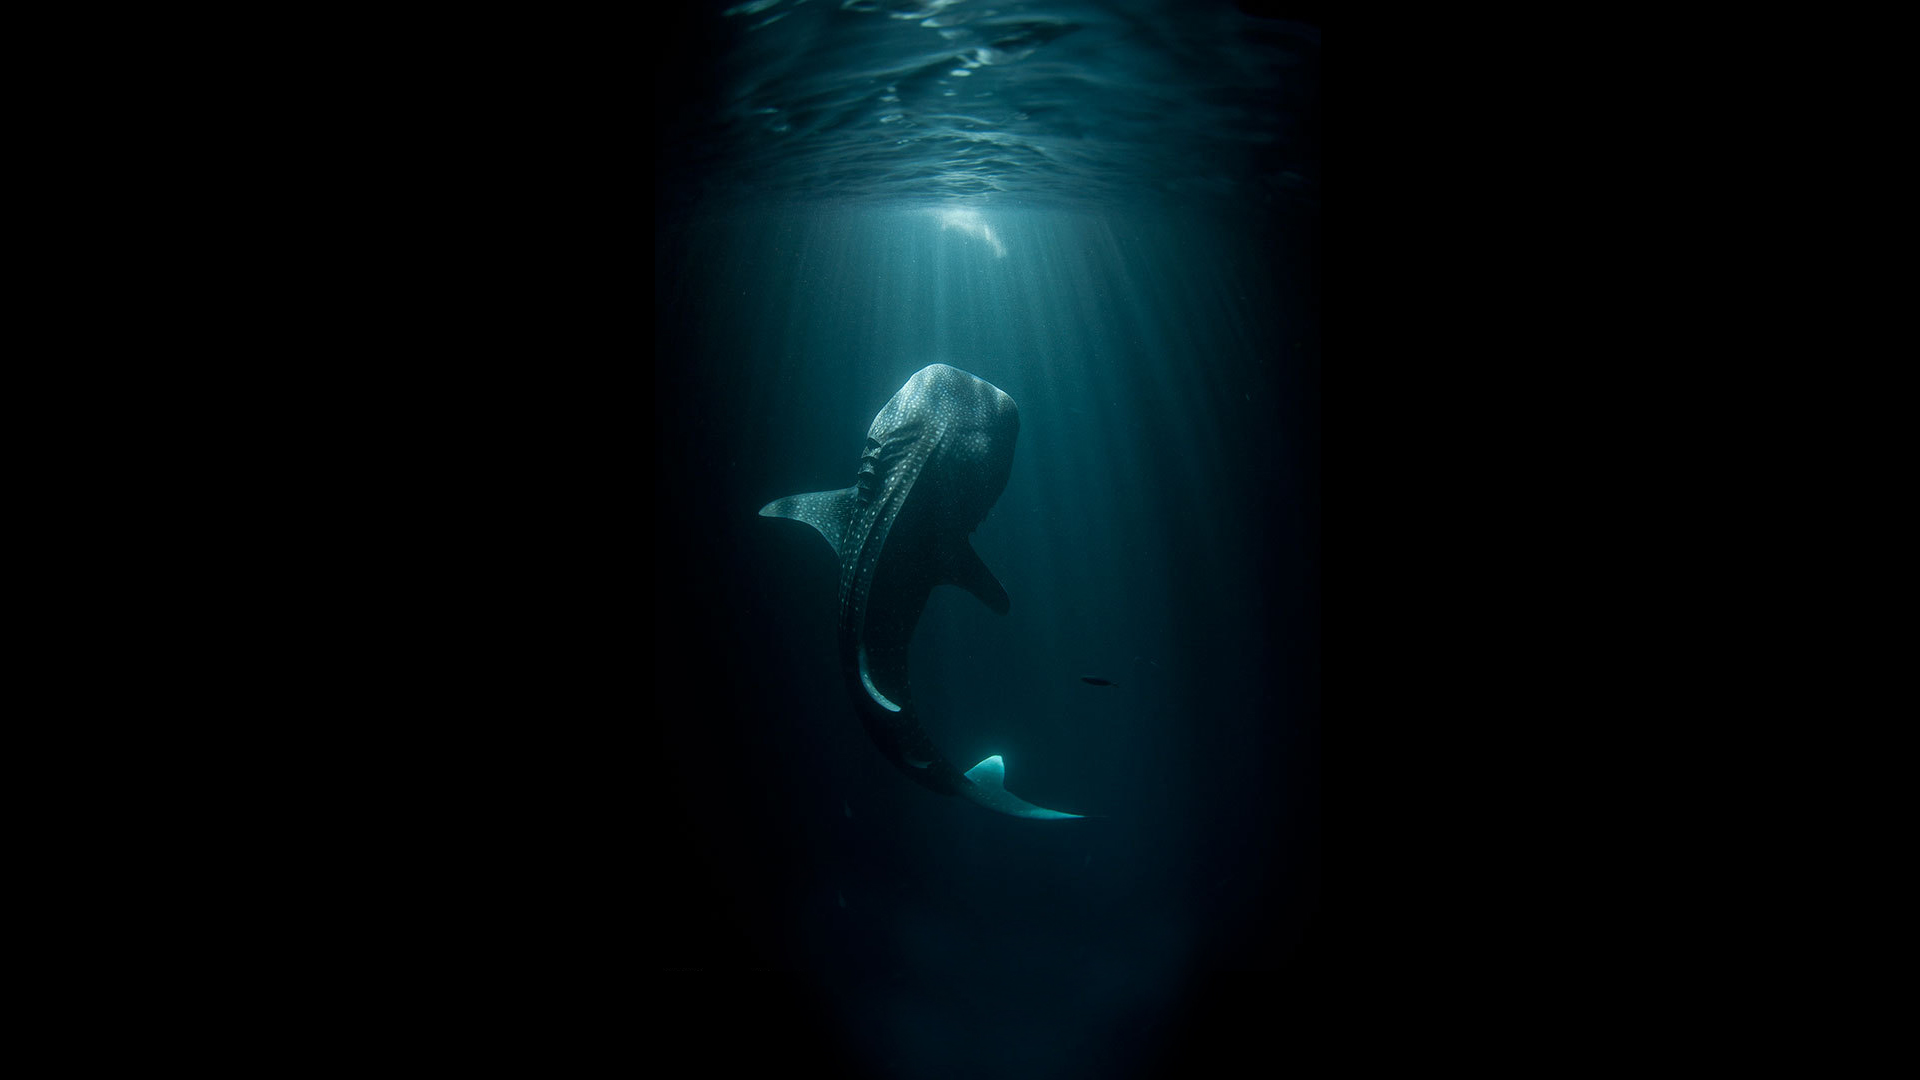 Fish Giant Underwater Ocean Black shark wallpaper background